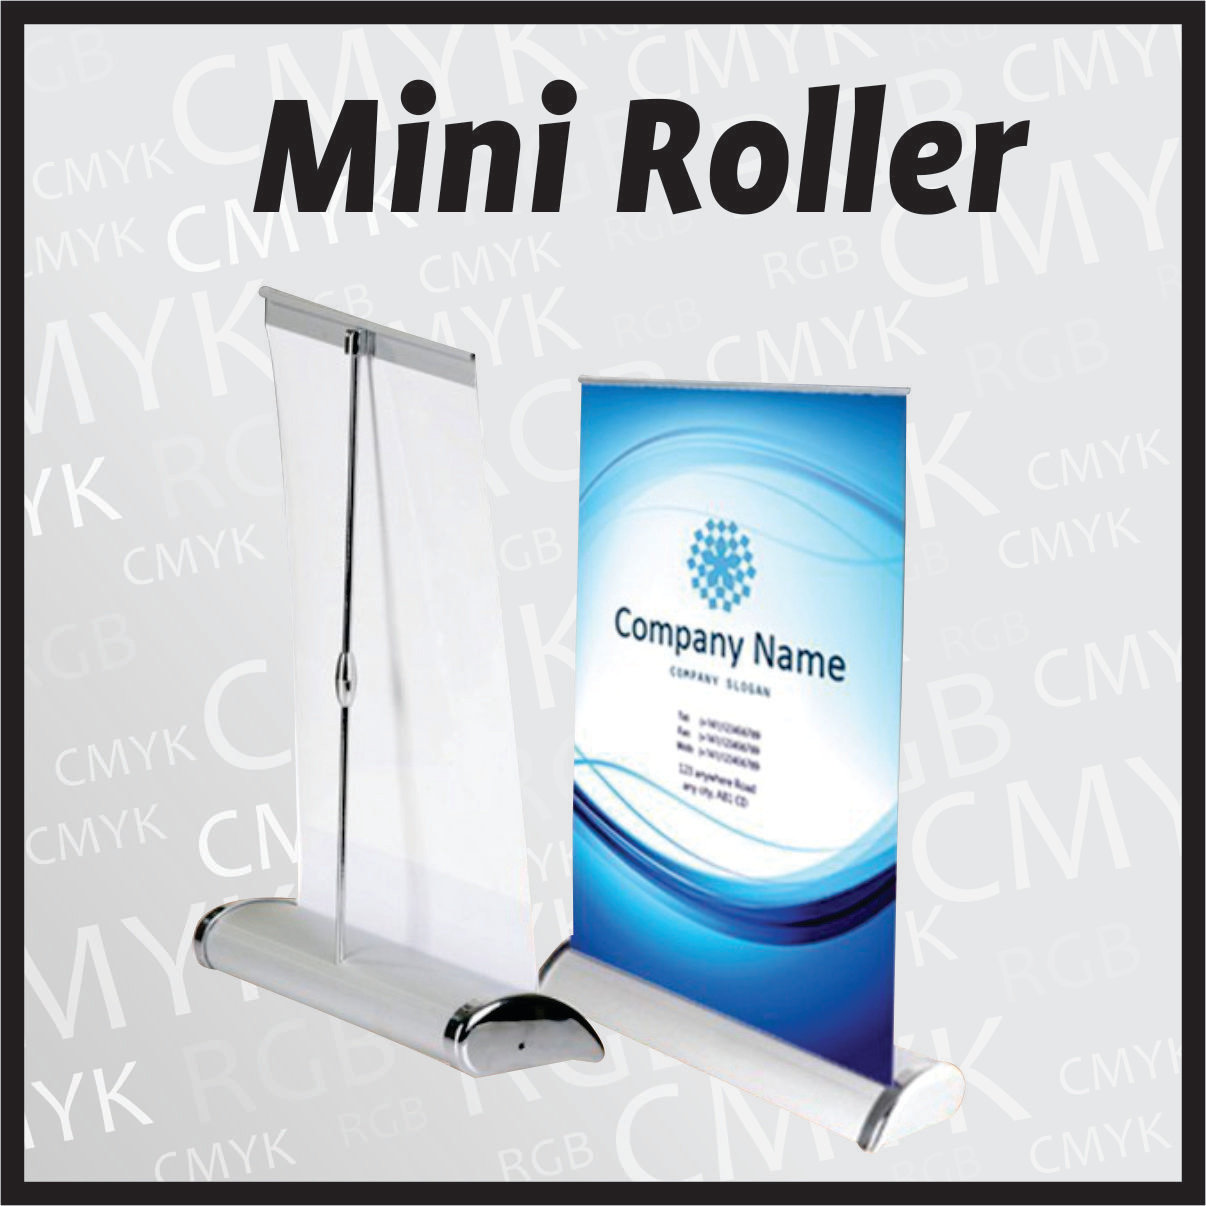 Mini Roller